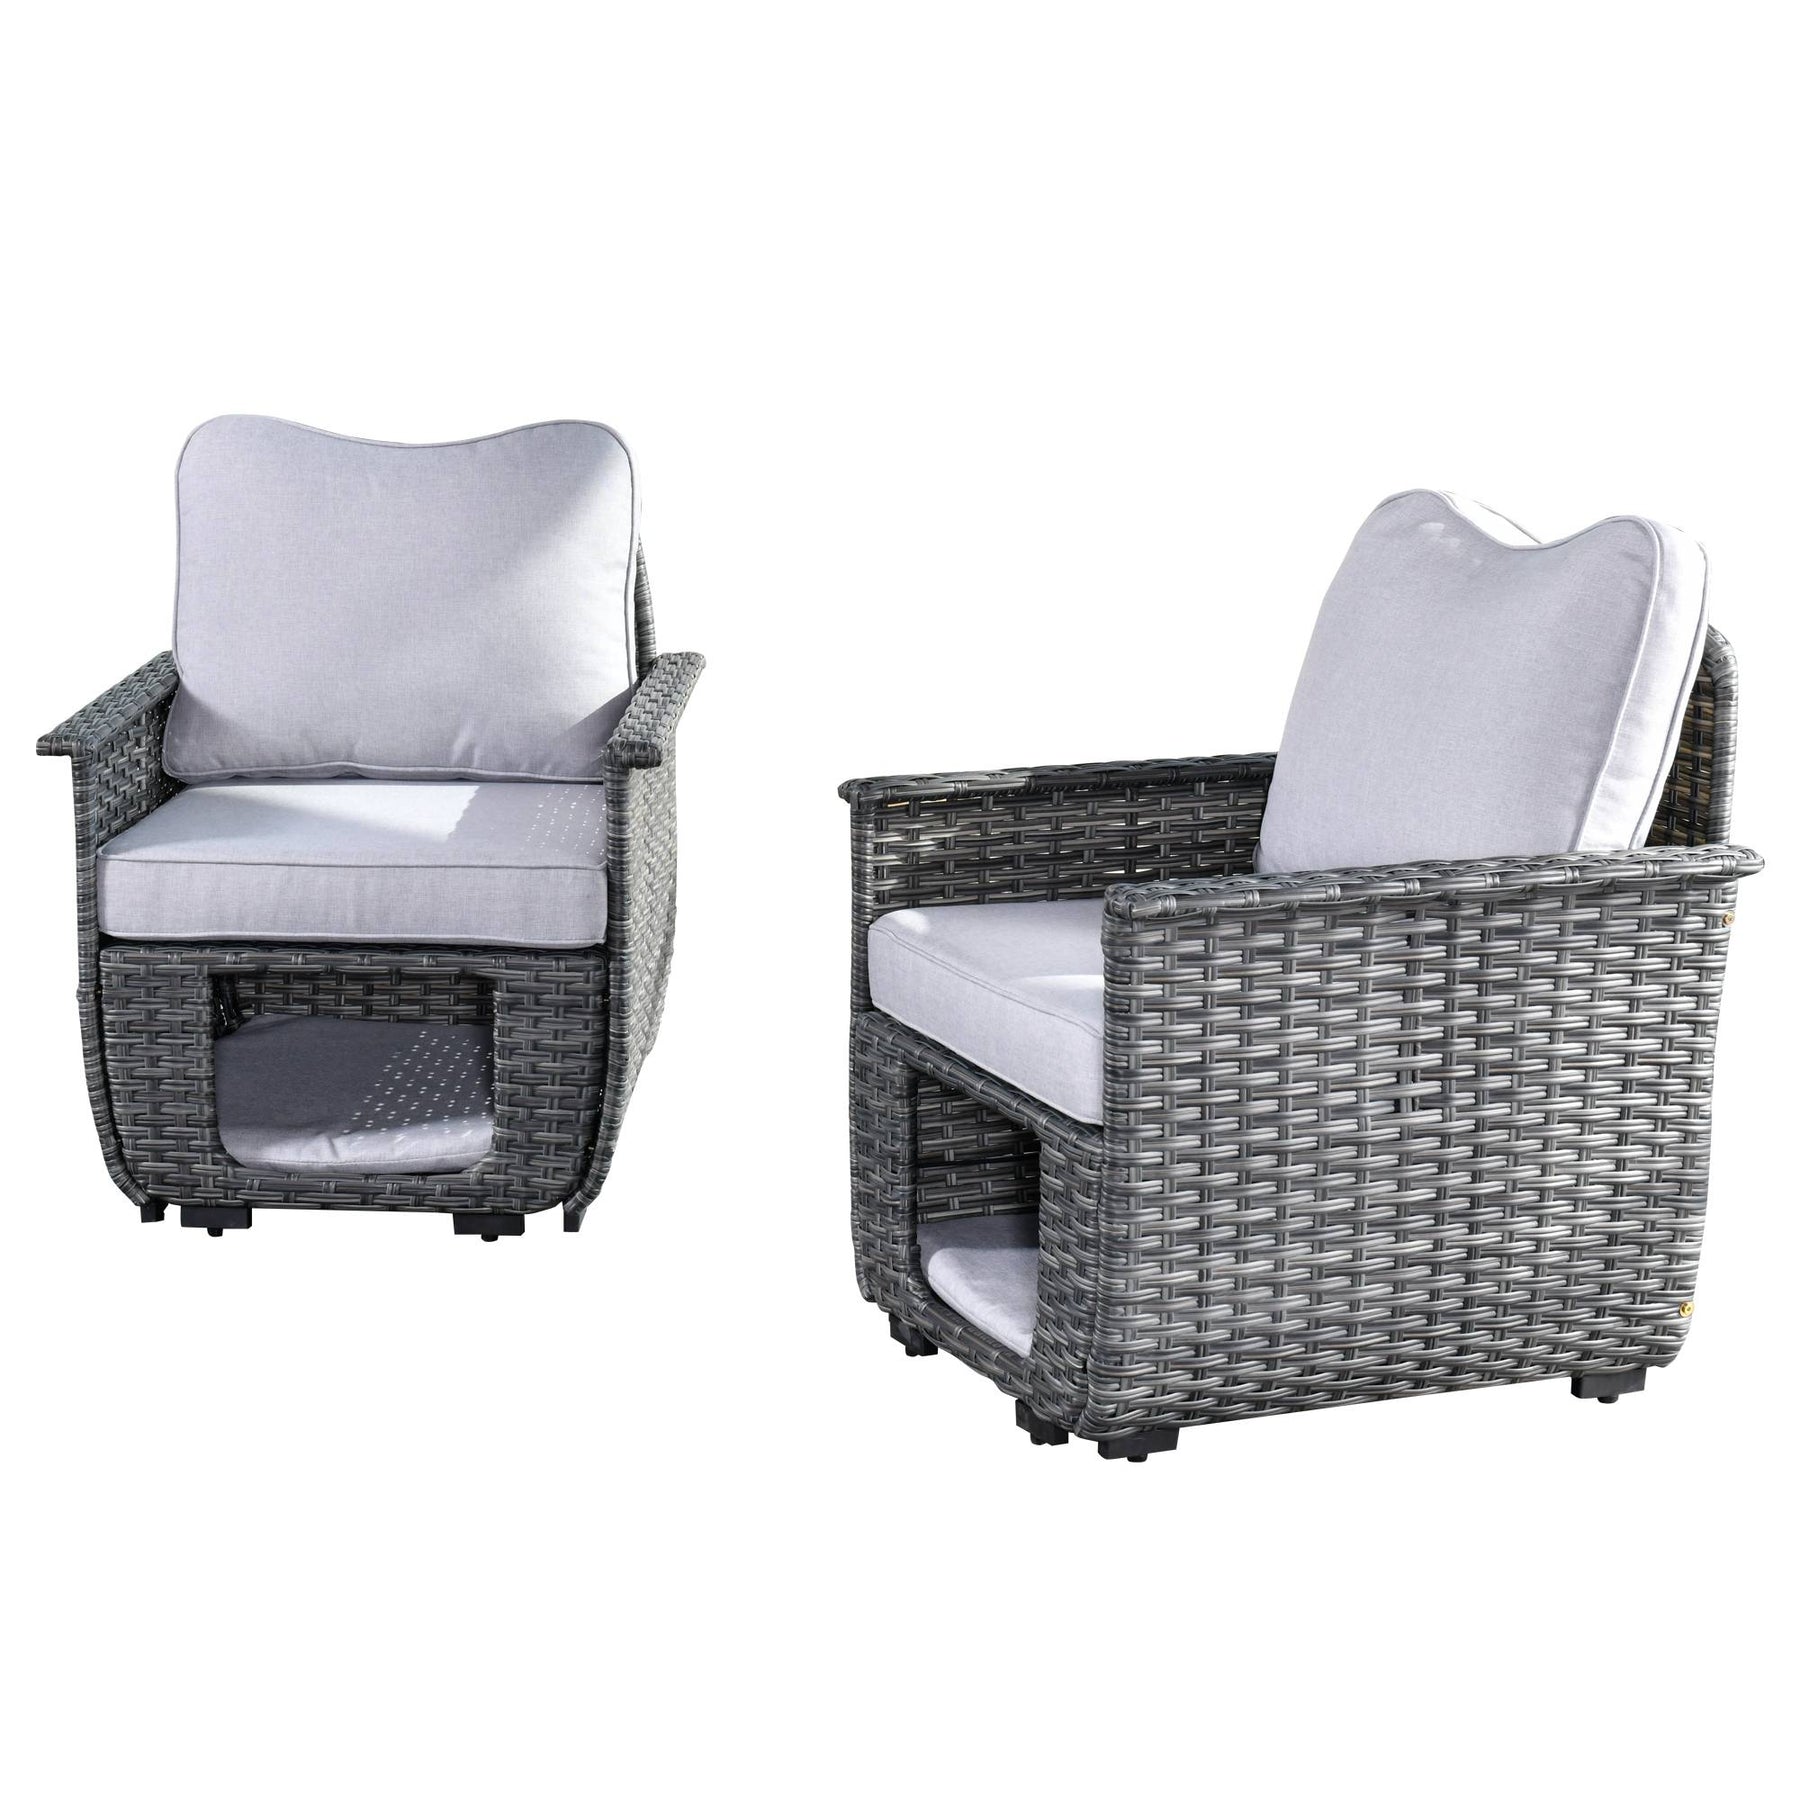 Ovios Patio Chairs Dark Grey Wicker 2 Pieces with Multifunctional Storage